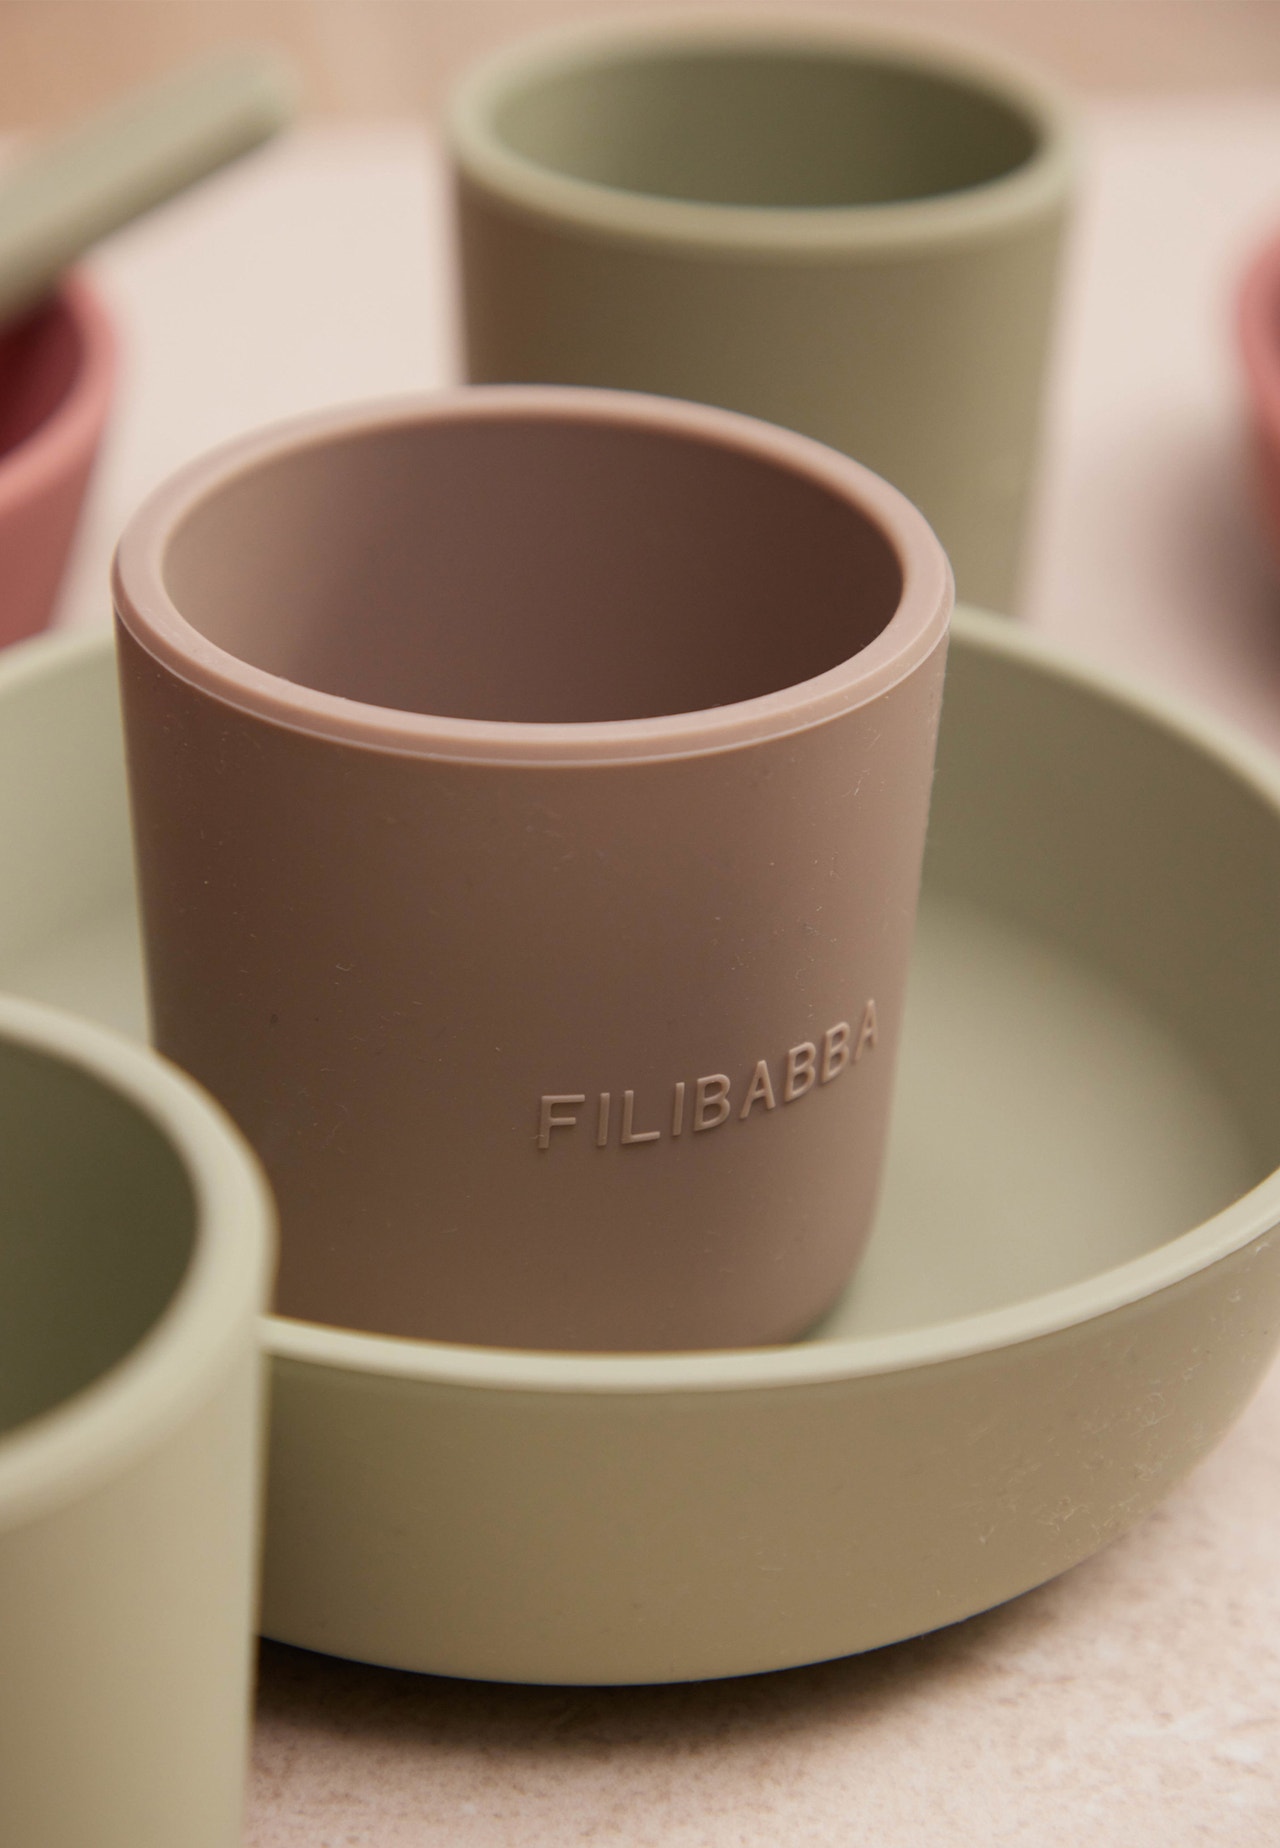 MAMA.LICIOUS Filibabba silicone cup, 2-pack -Warm Grey - 44444416